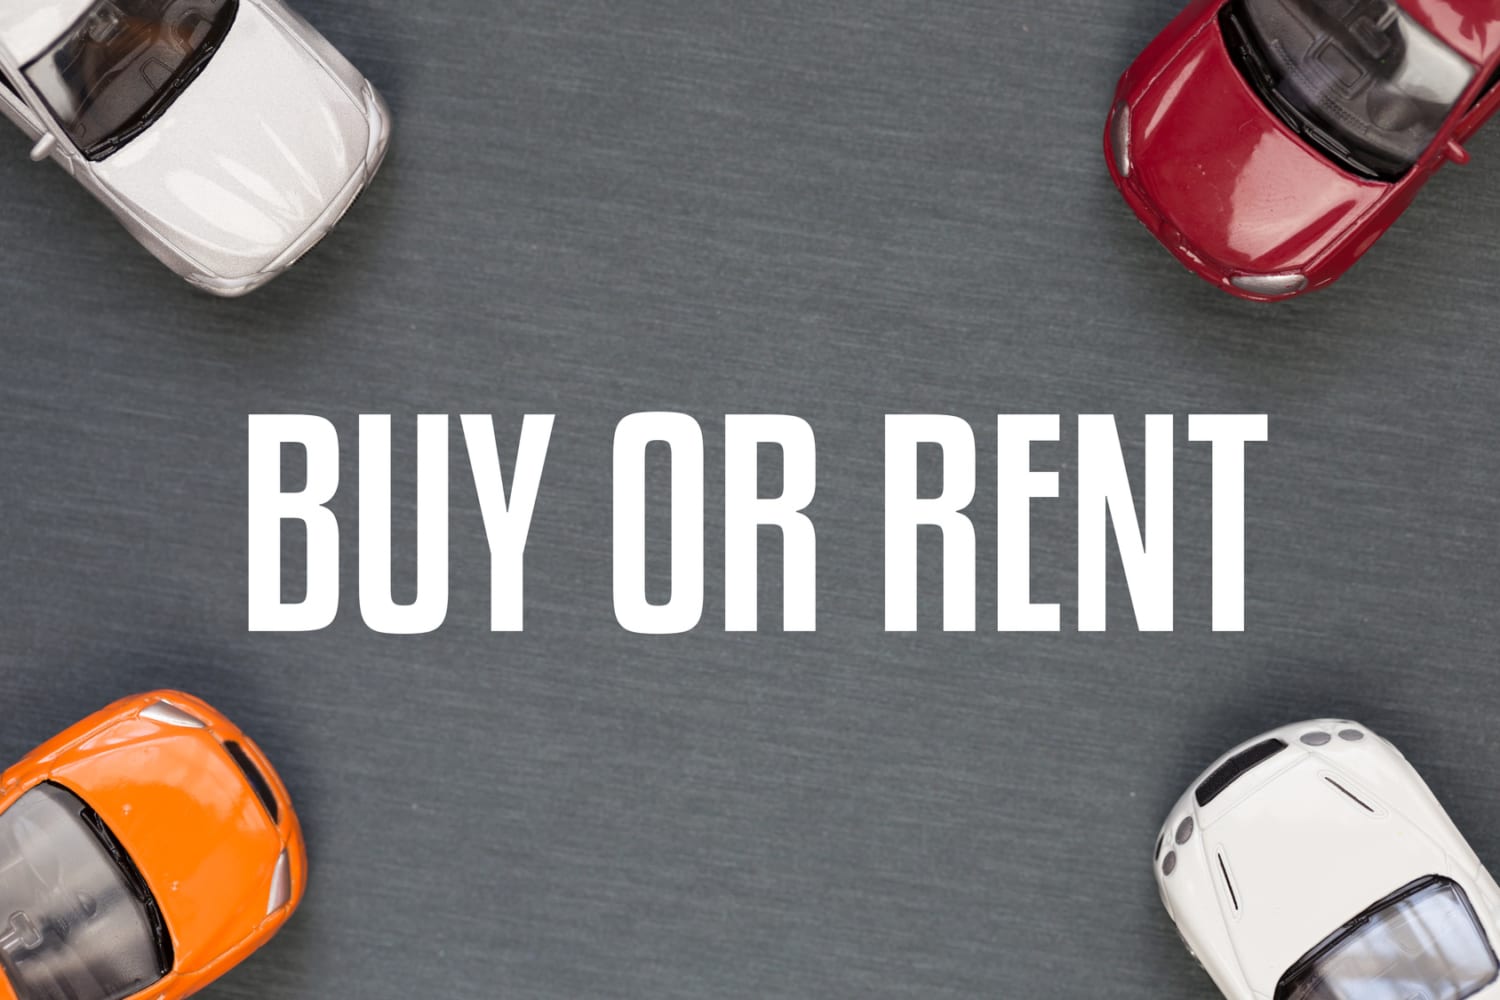 buying vs leasing vs renting a car